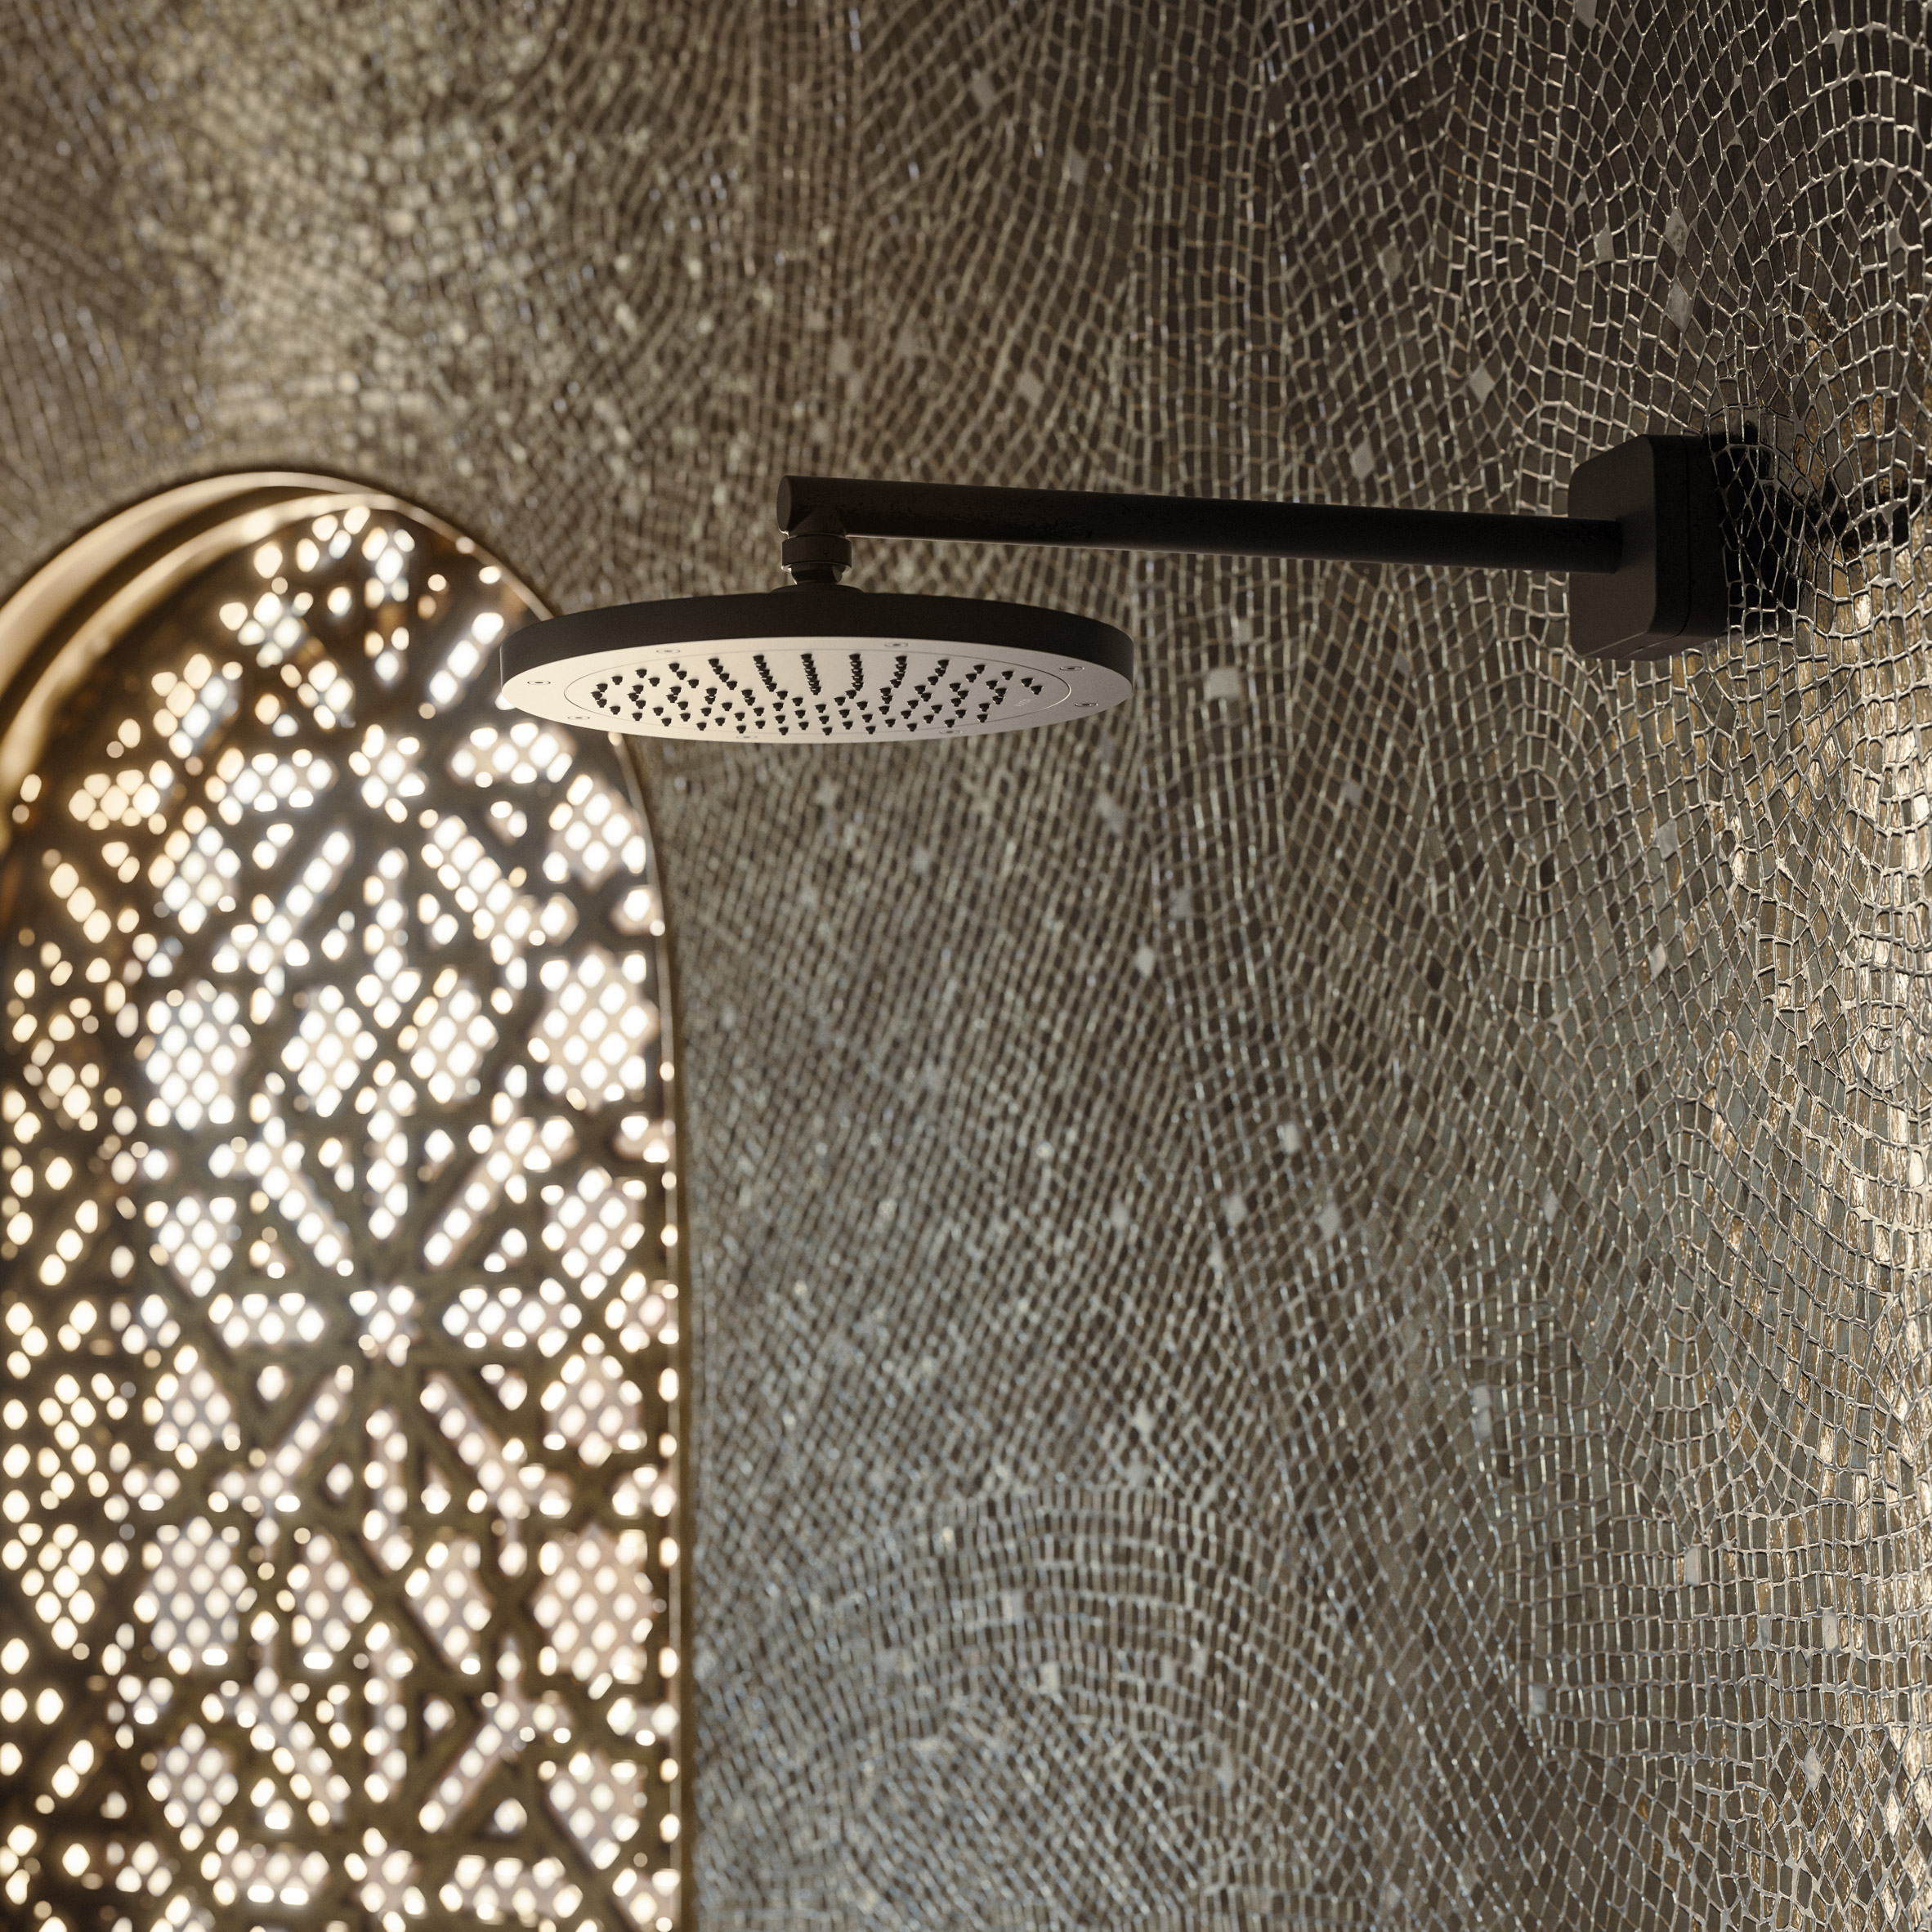 Matt black Axor shower fitting in Hadi Teherani Distinctive concept bathroom